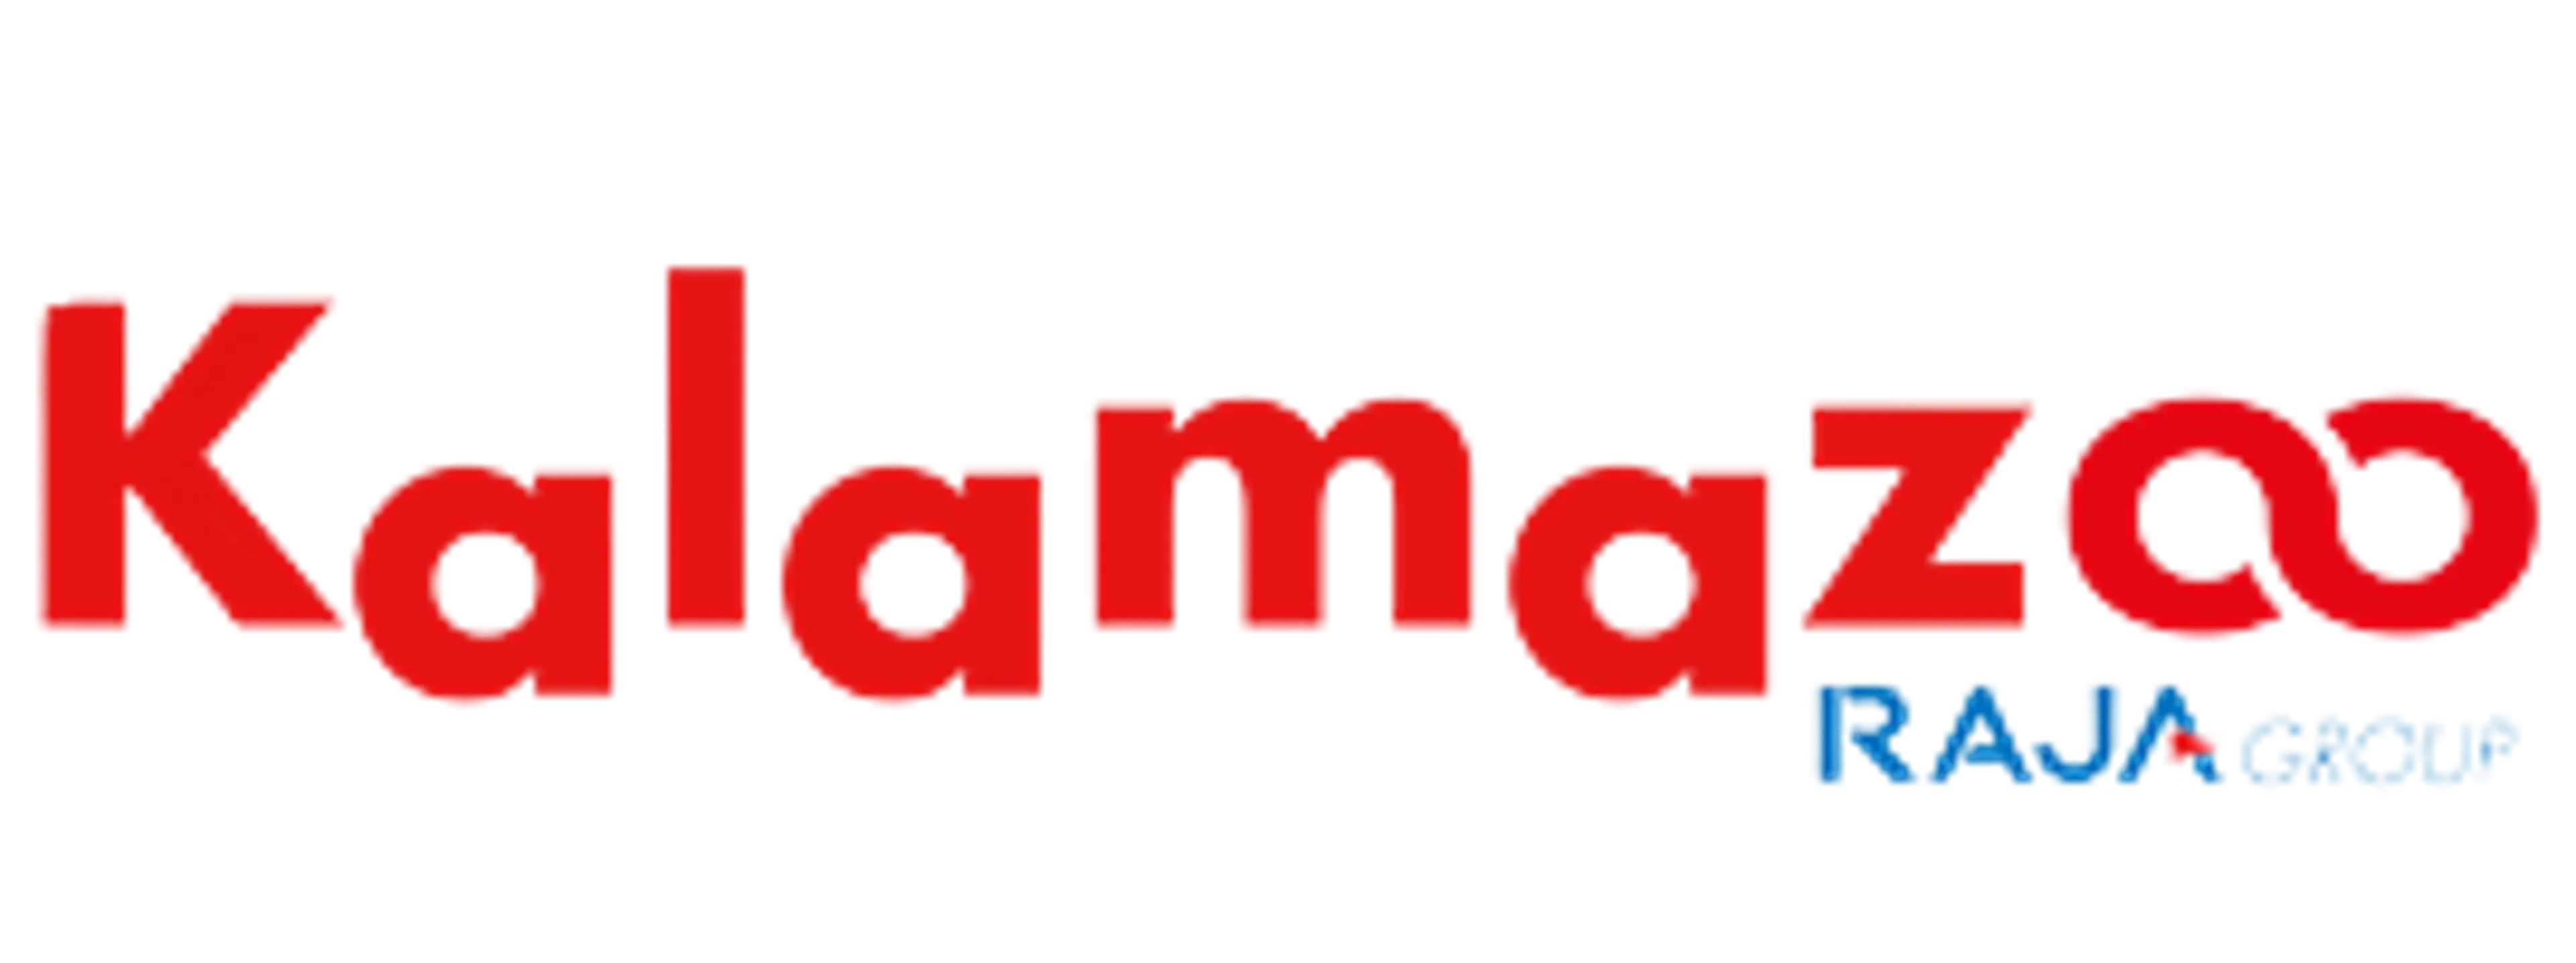 KALAMAZOO logo